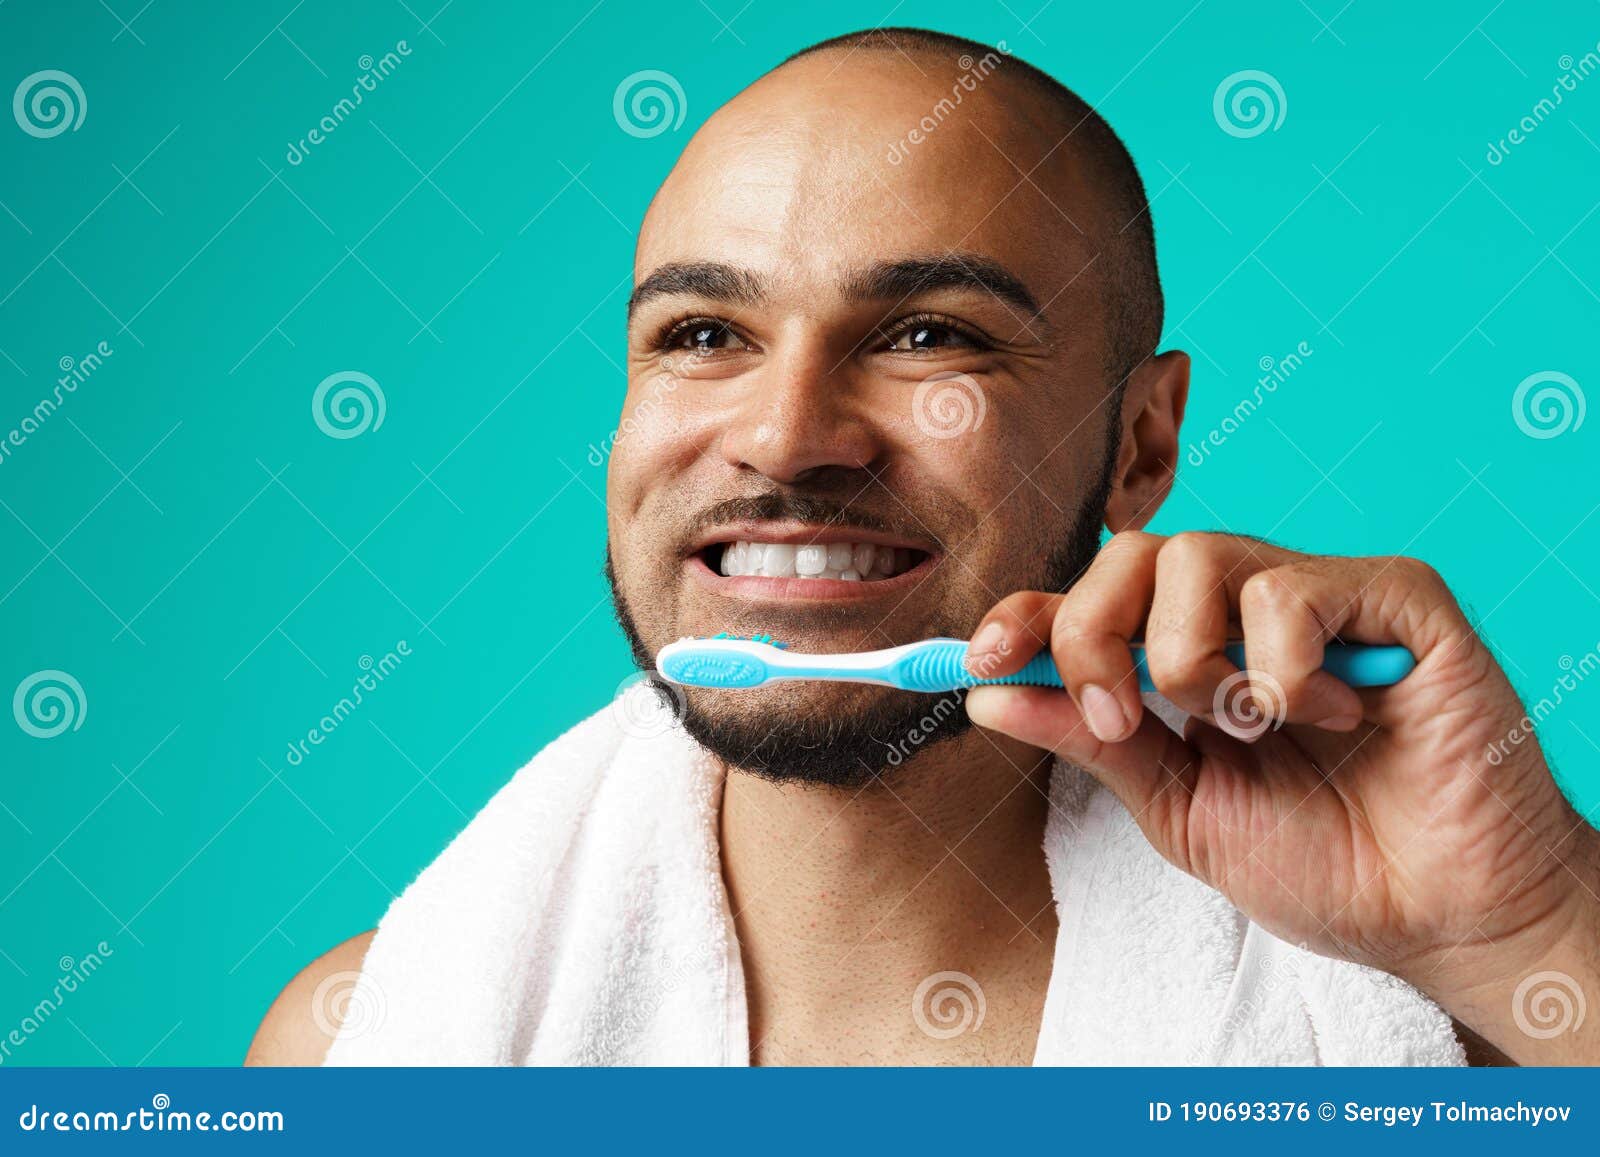 Cheerful Dark-skinned Male Brushing His Teeth Against Turquoise ...